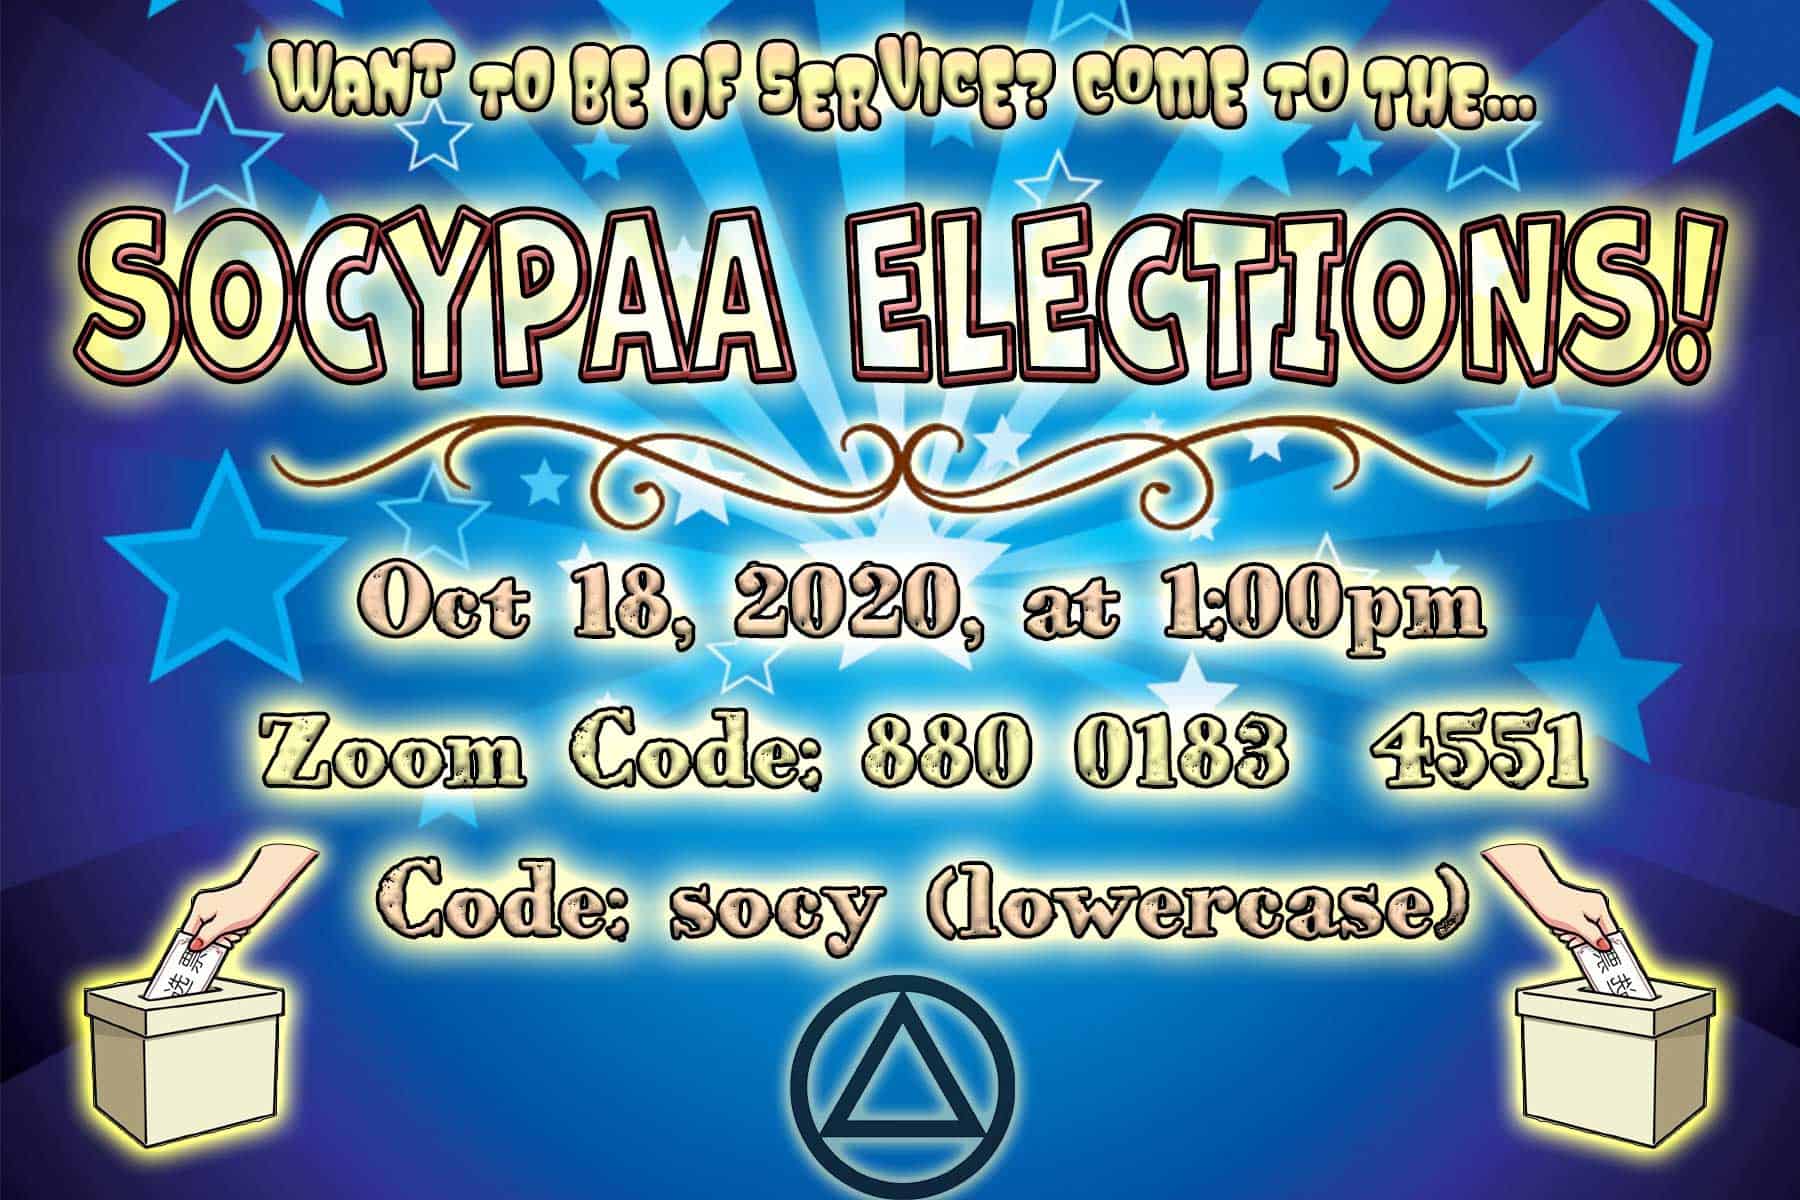 2020 Socypaa Elections flyer